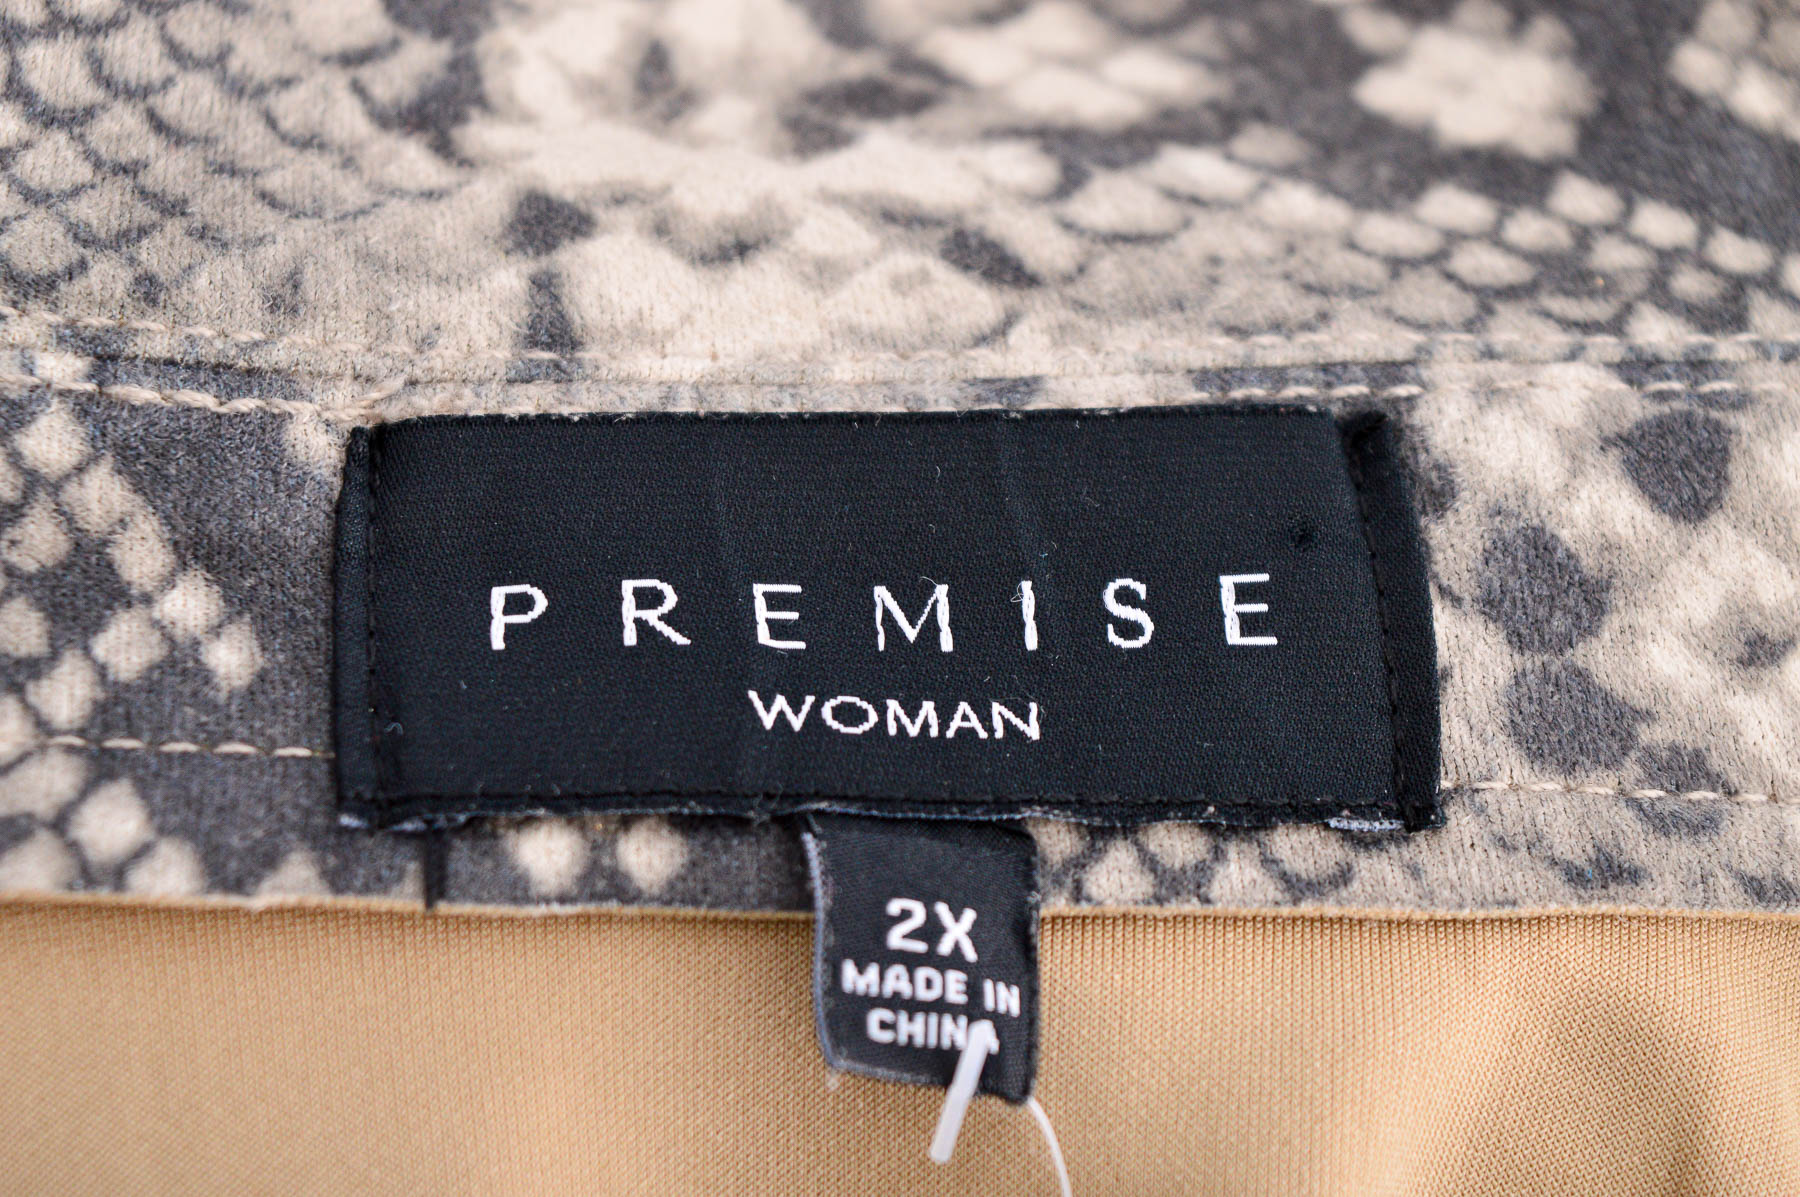 Women's blazer - PREMISE - 2